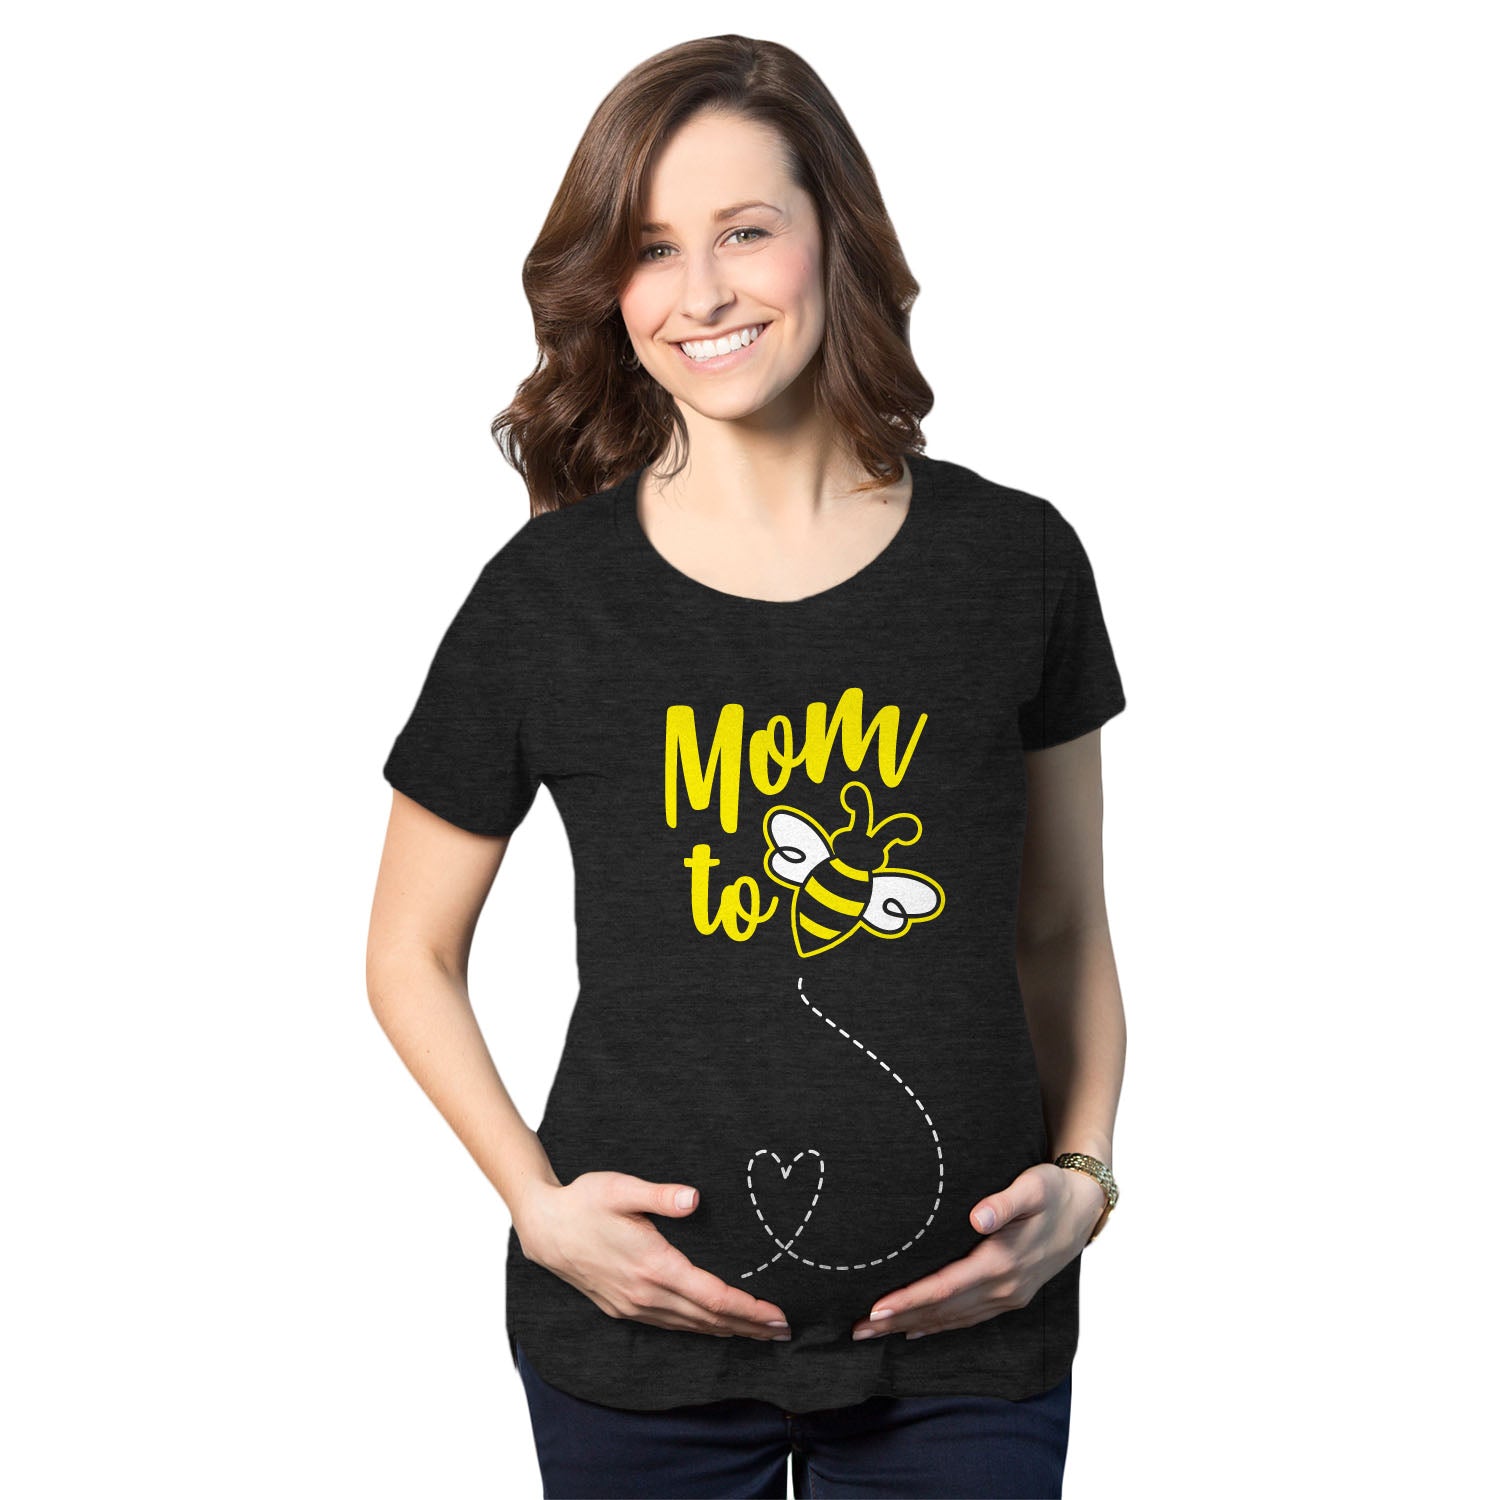 Funny Heather Black Mom To Bee Maternity T Shirt Nerdy animal Tee